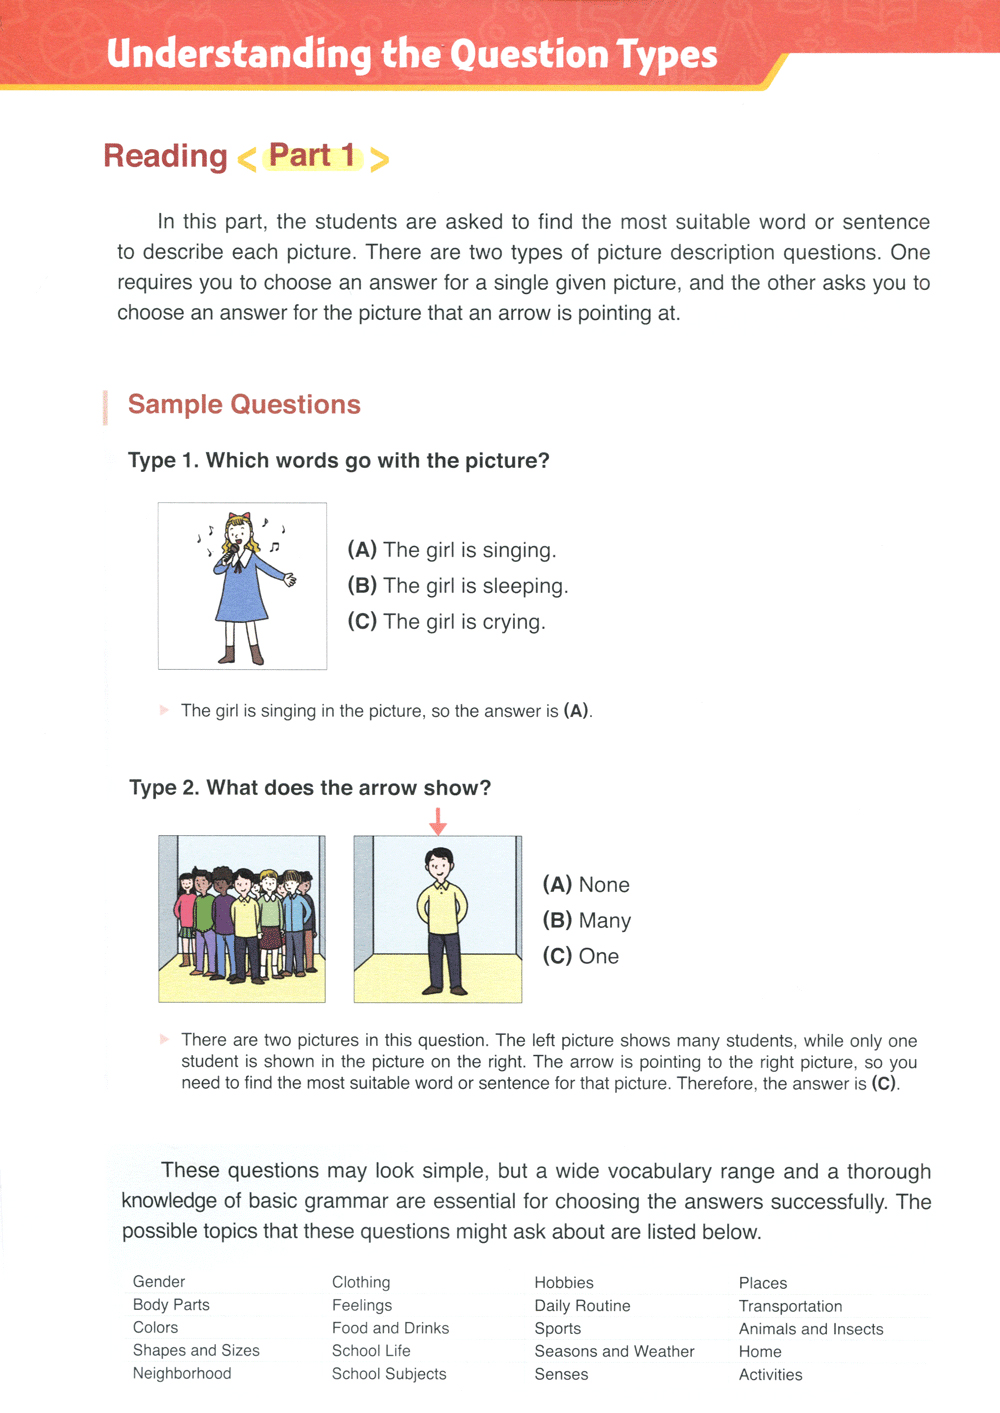 Toefl Primary Step 1 - Book 1 PDF